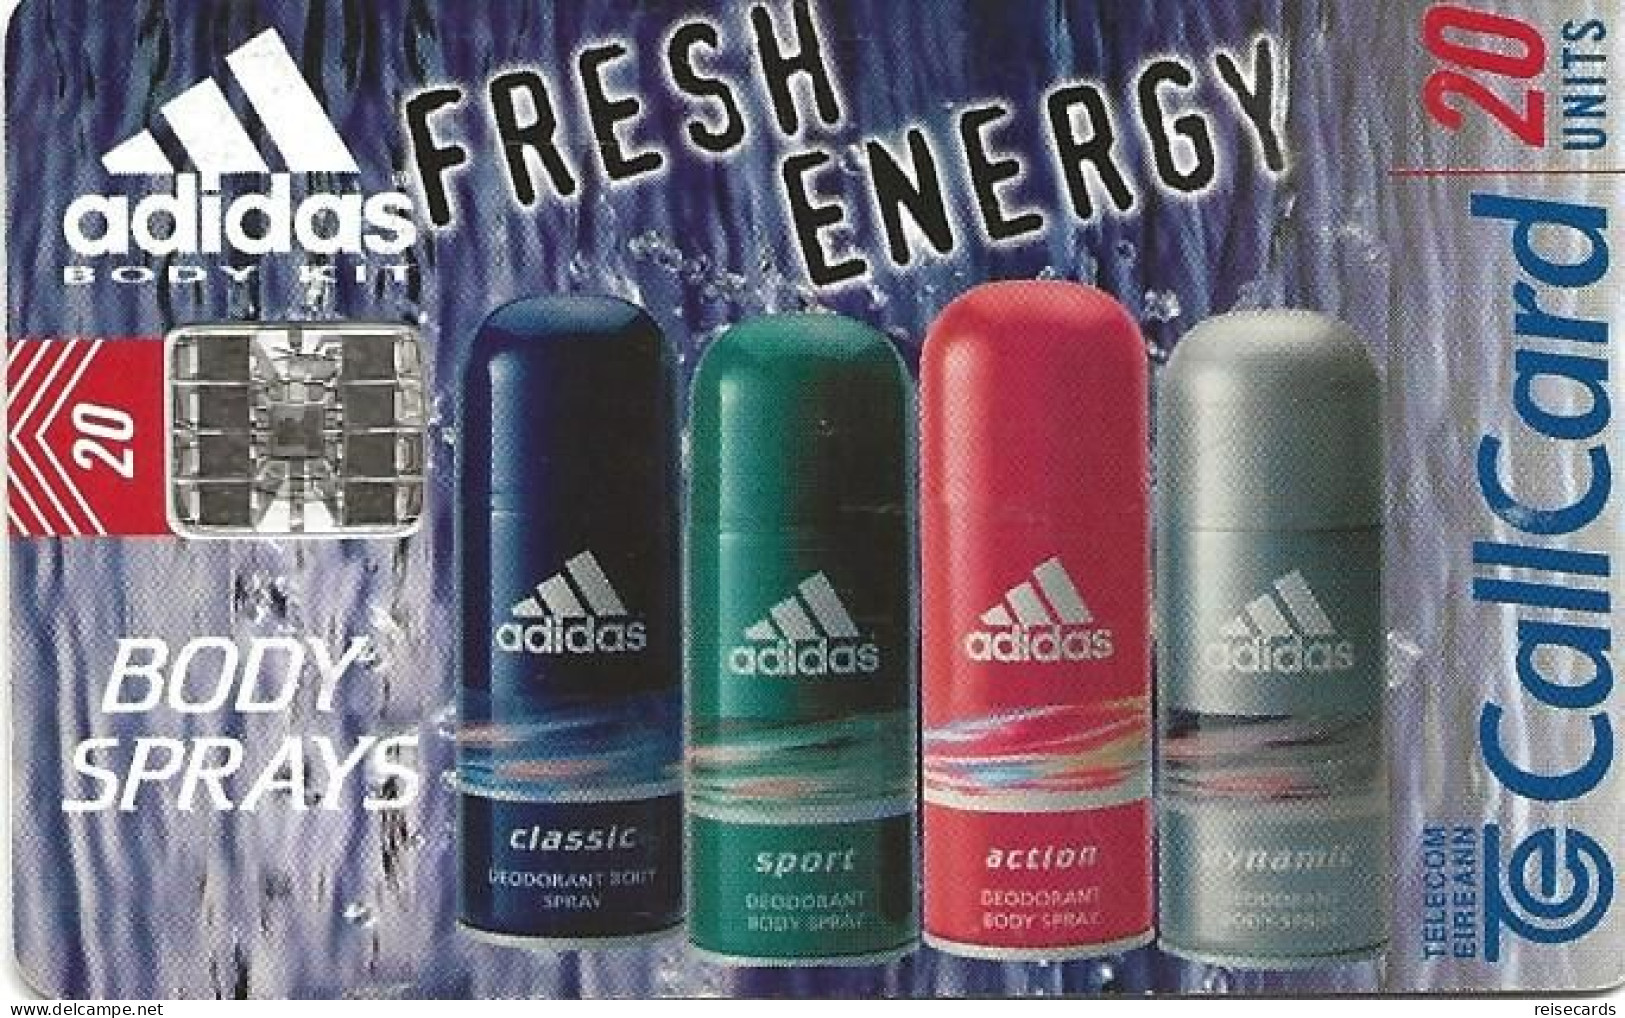 Ireland: Telecom Eireann - 1998 Adidas Body Sprays - Ierland